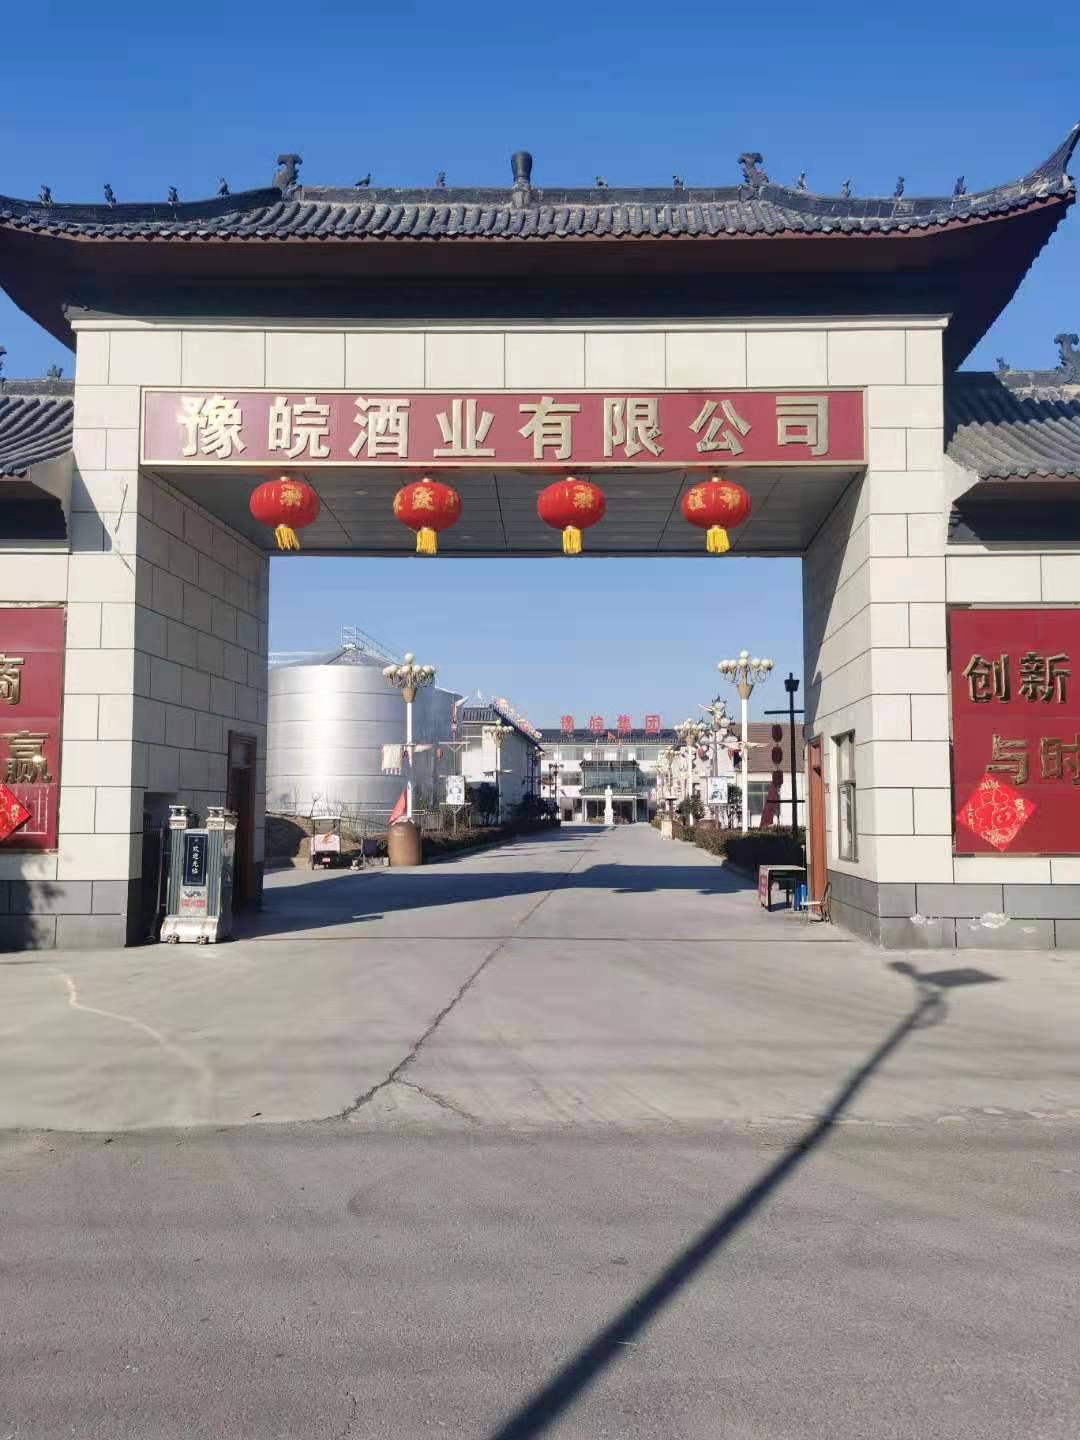   Anhui Guyin Liquor Industry Co., Ltd